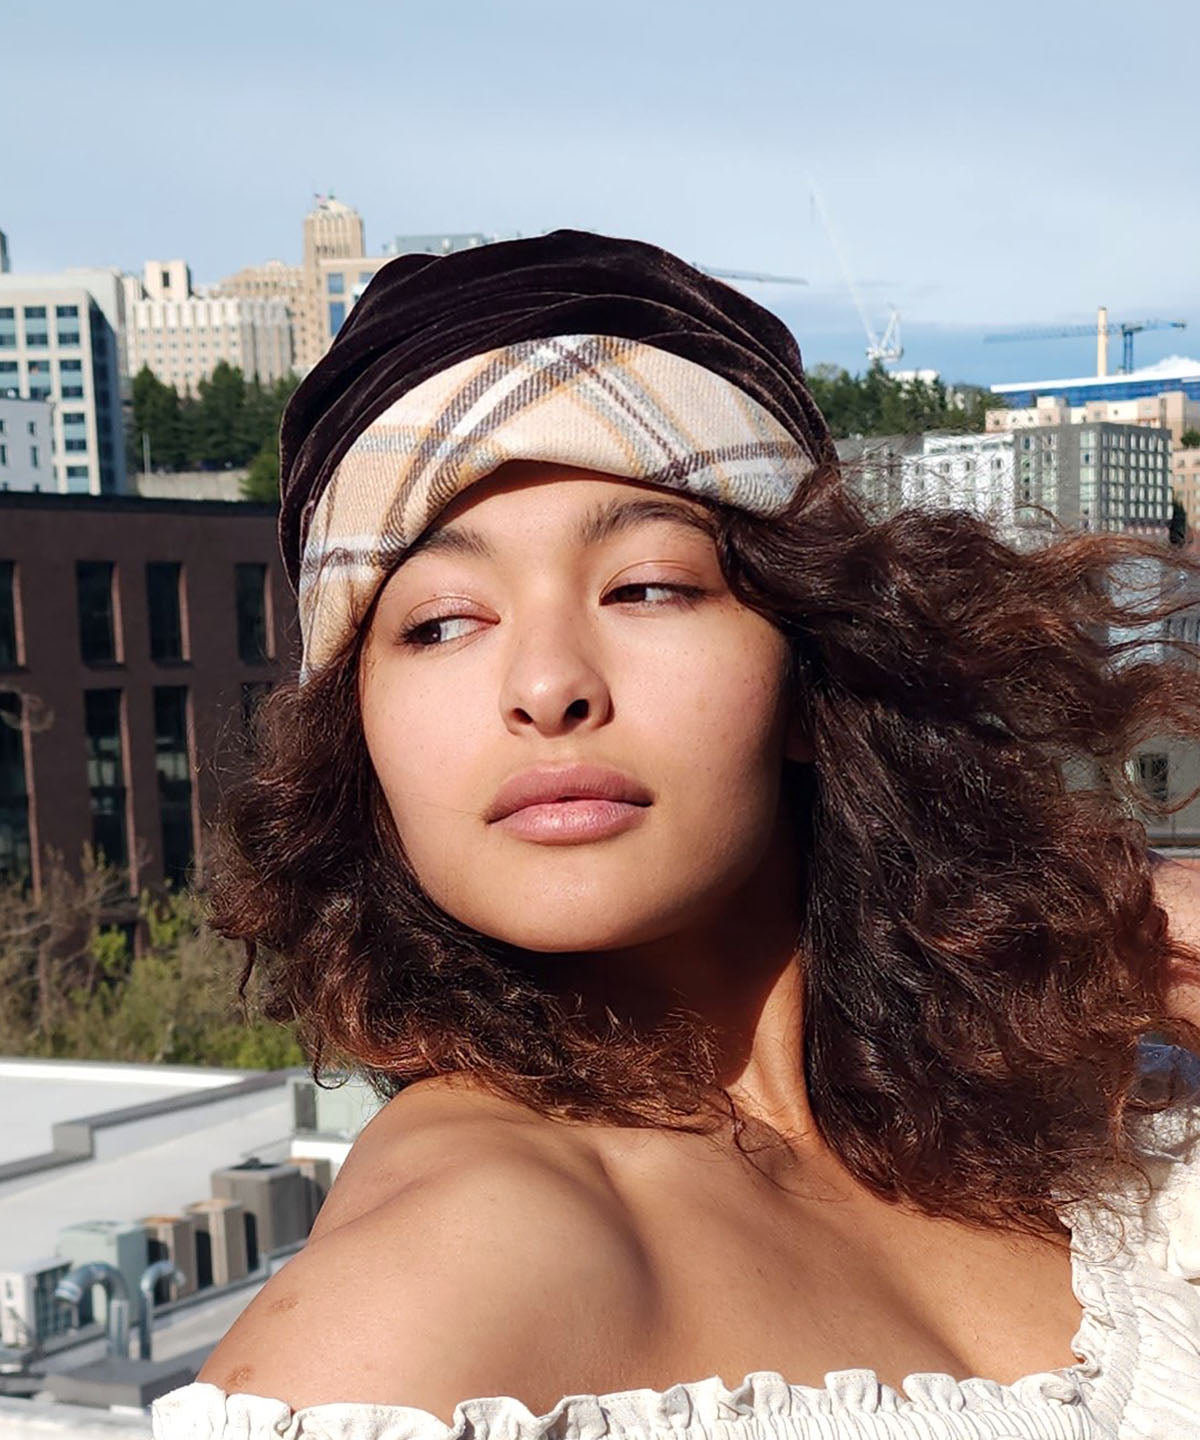 Ana Cloche Style Hat in Daybreak Plaid shown on Model | Handmade By Pandemonium Millinery | Seattle WA USA